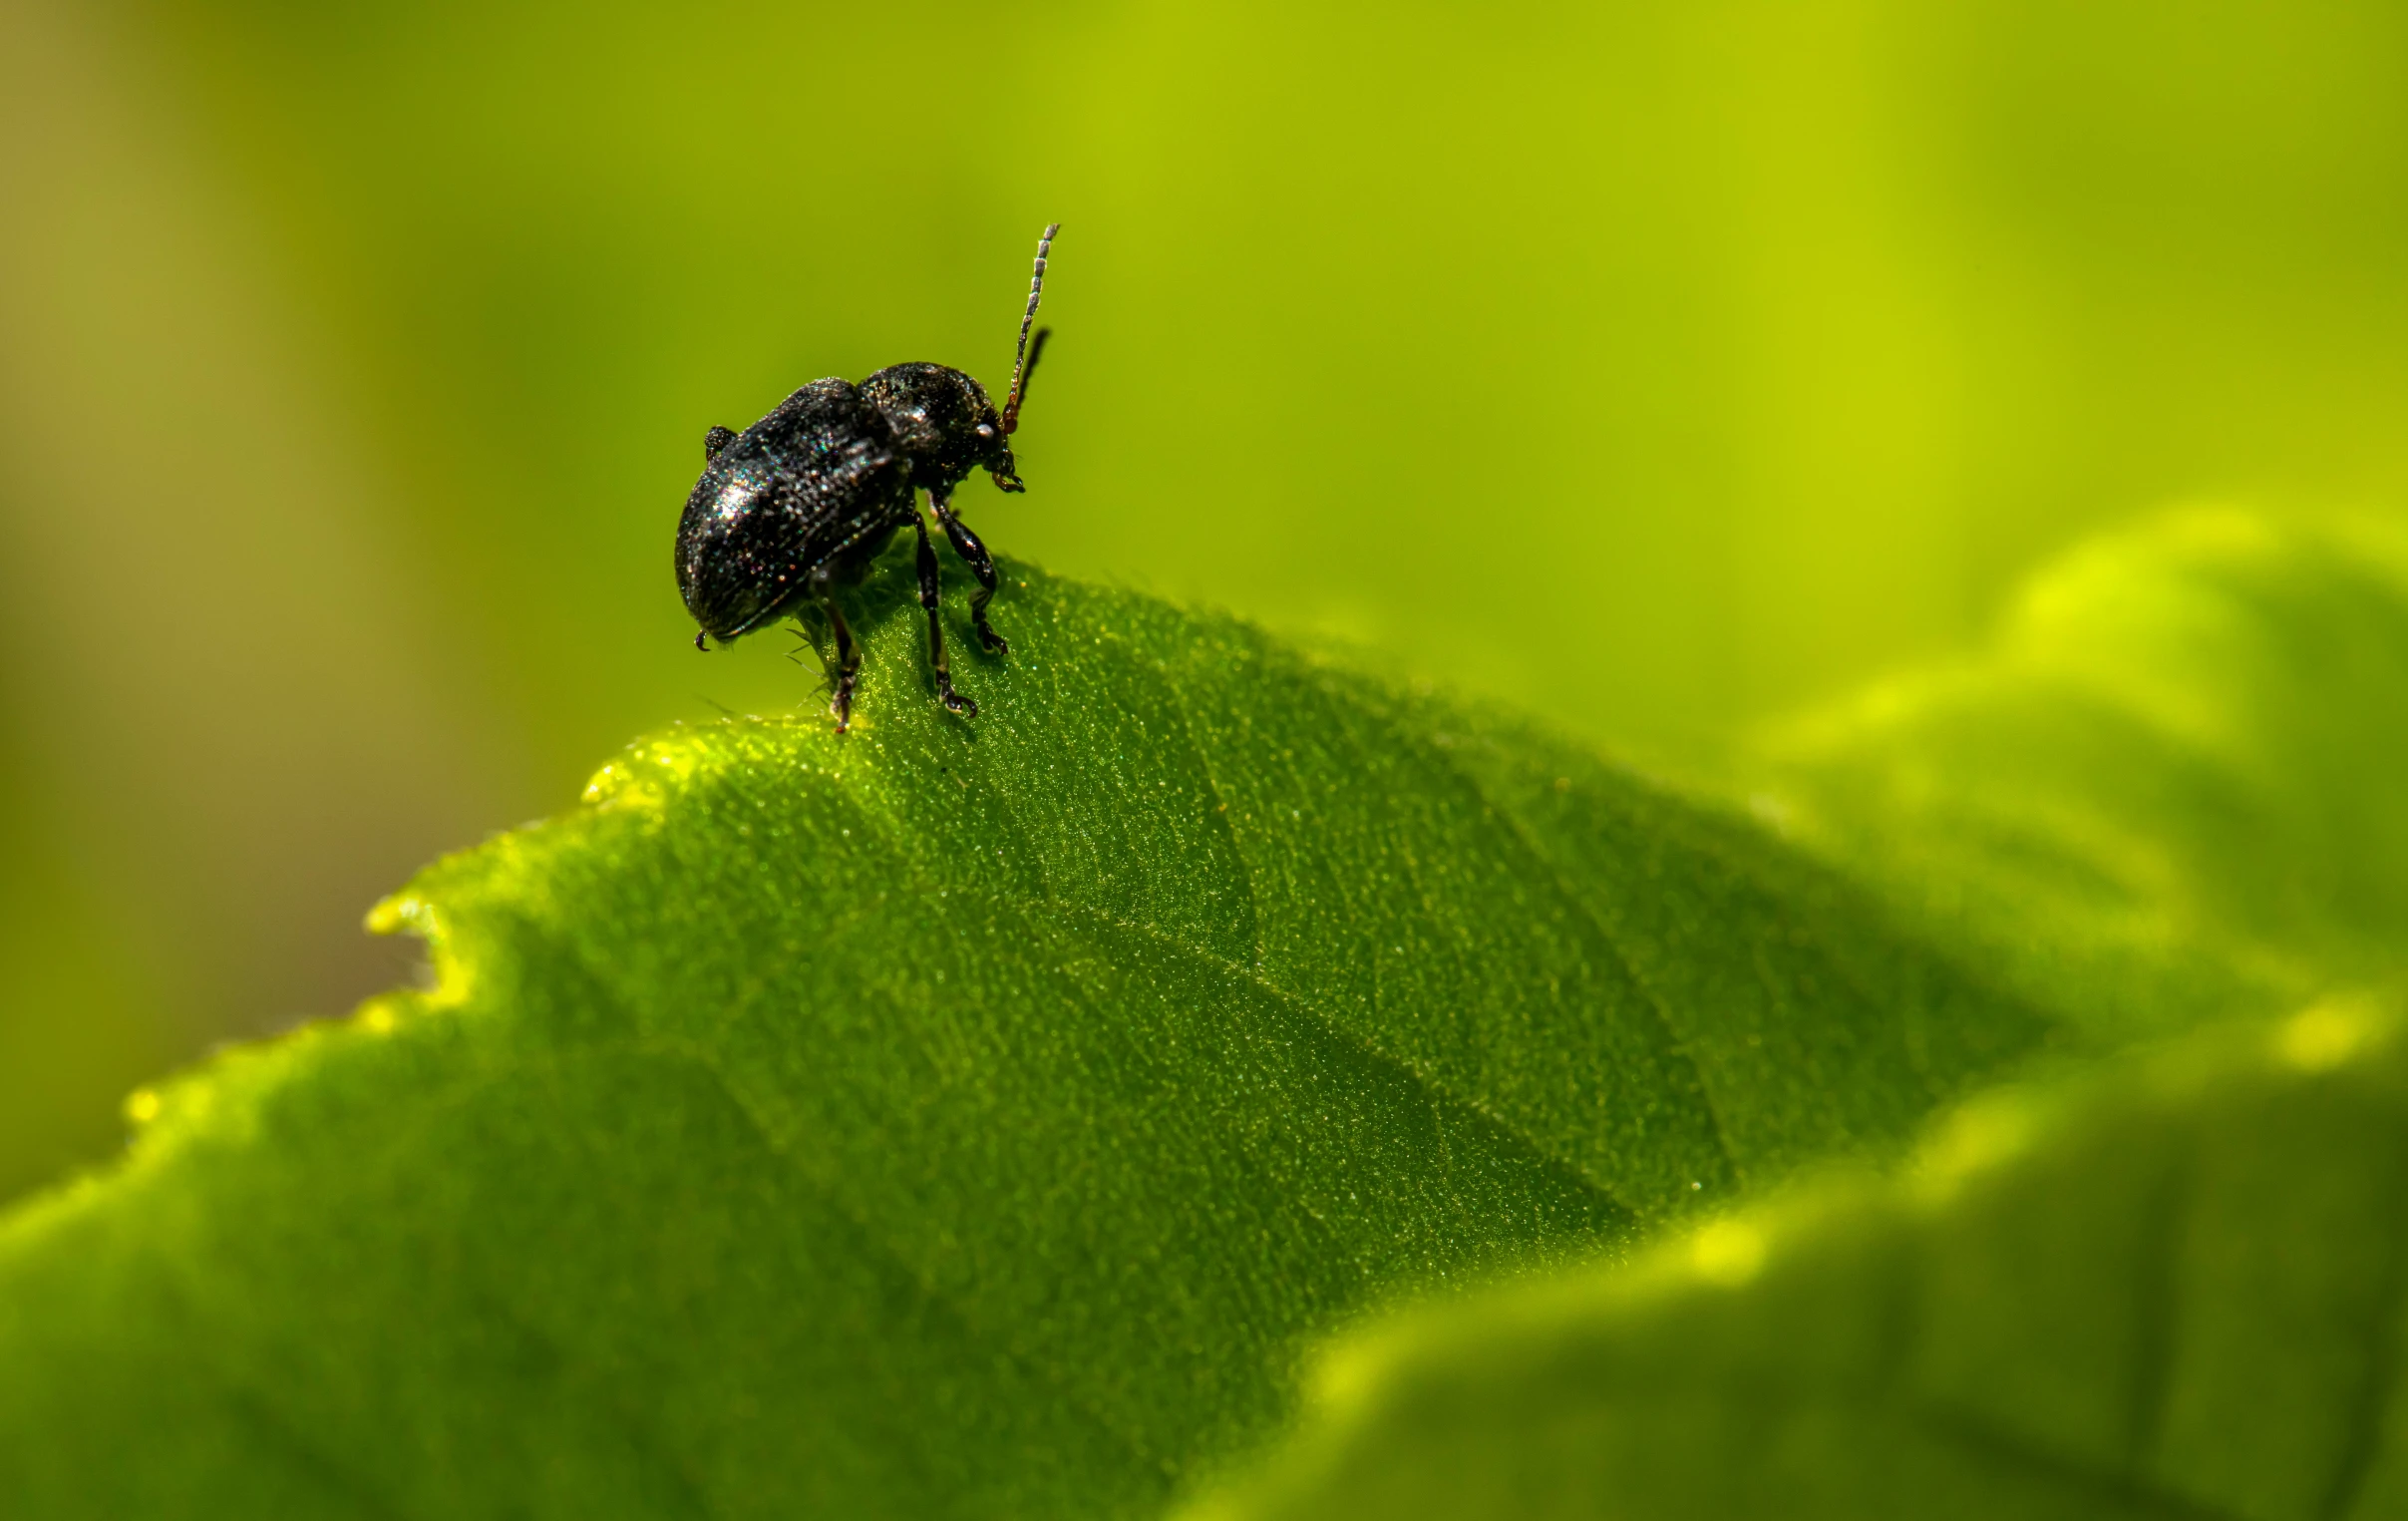 a bug crawling on a leaf in the sun